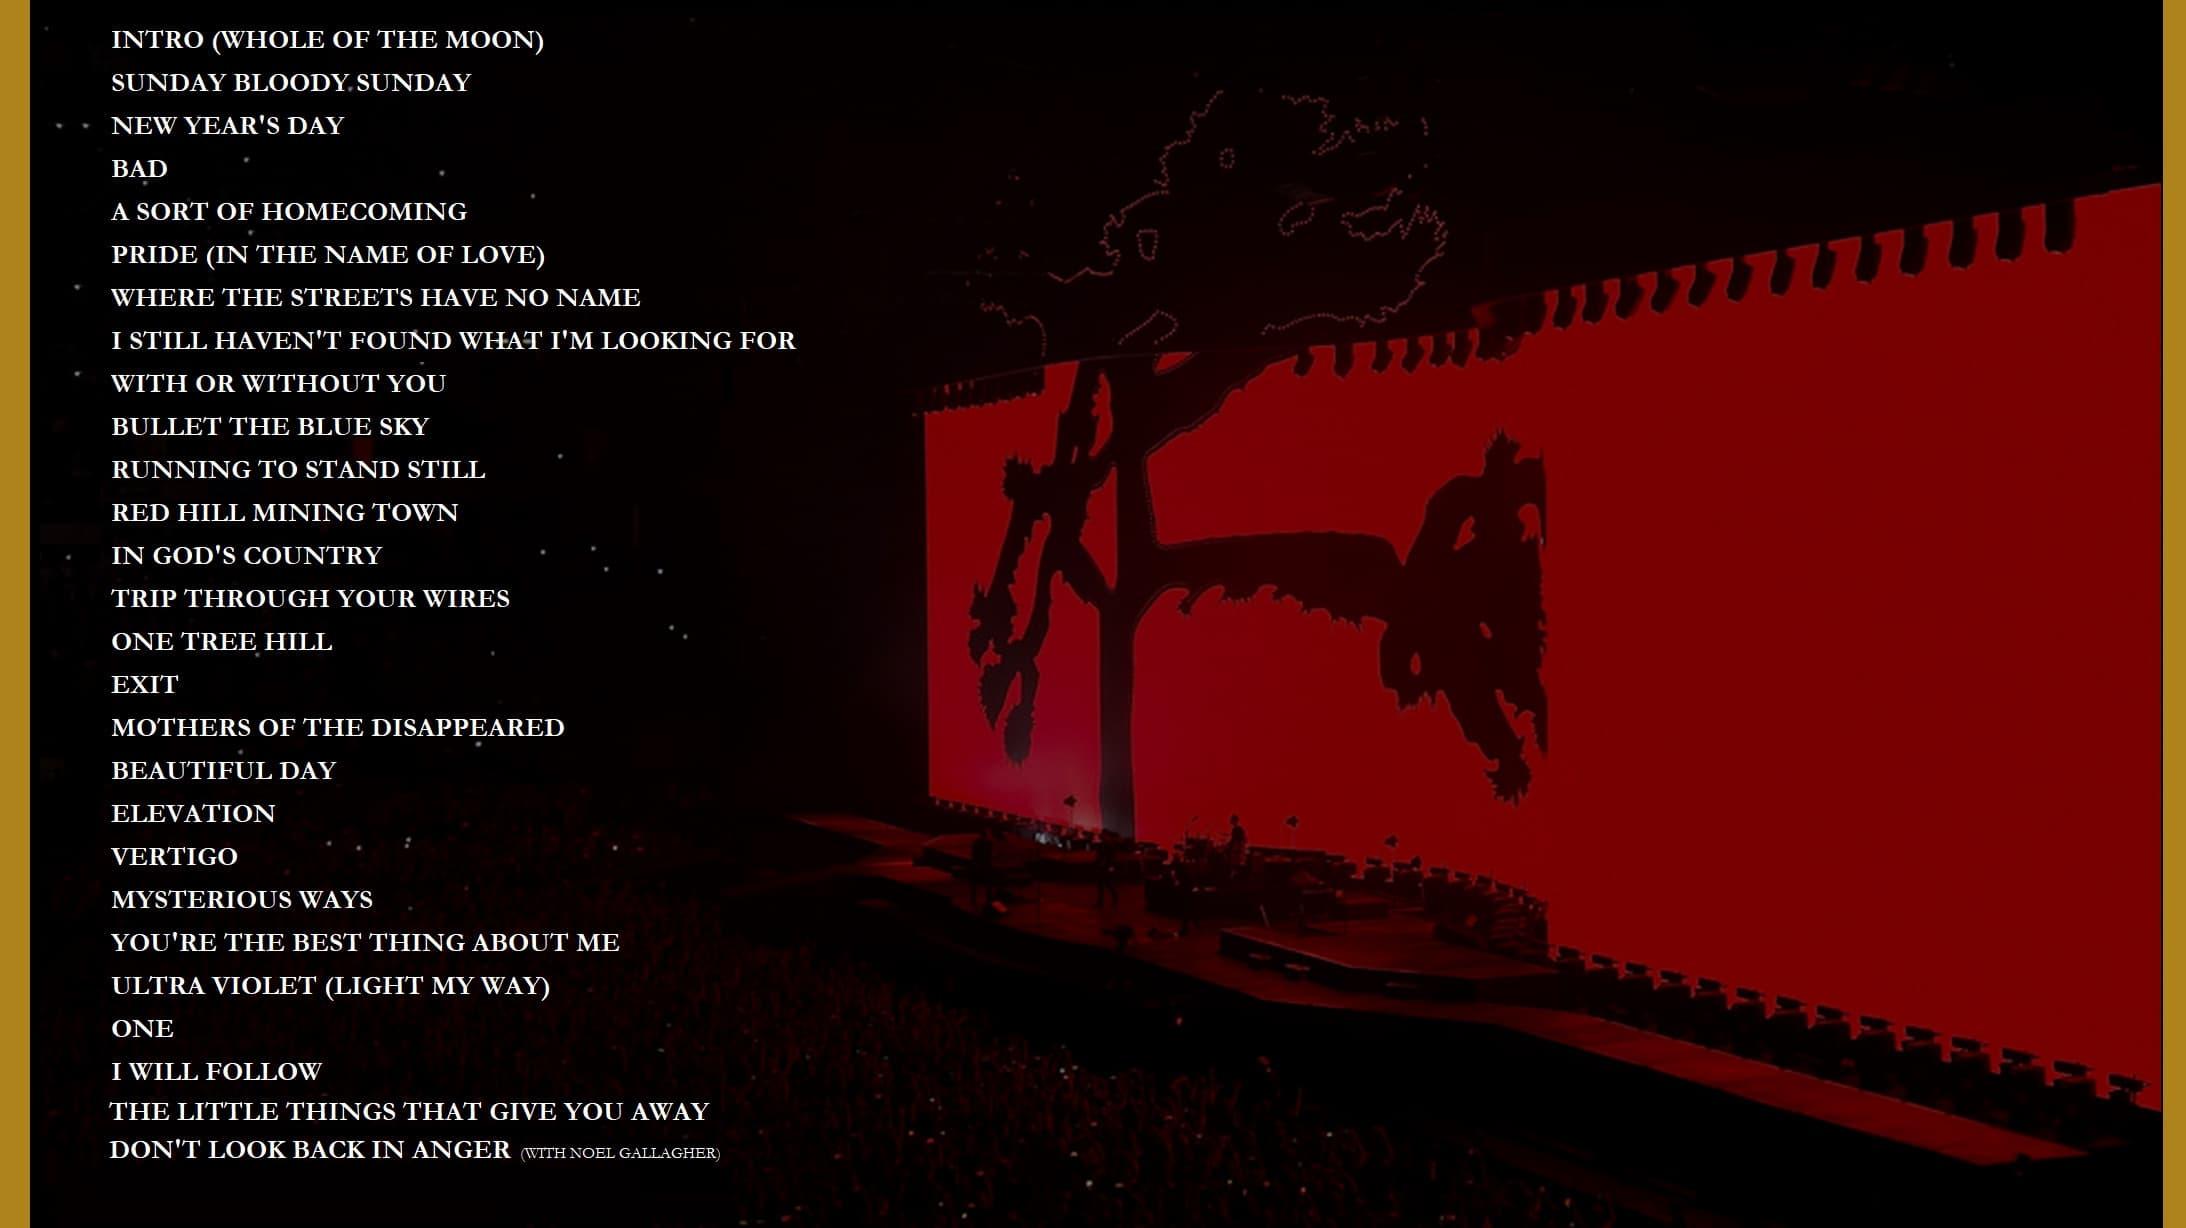 U2: The Joshua Tree Tour 2017 backdrop